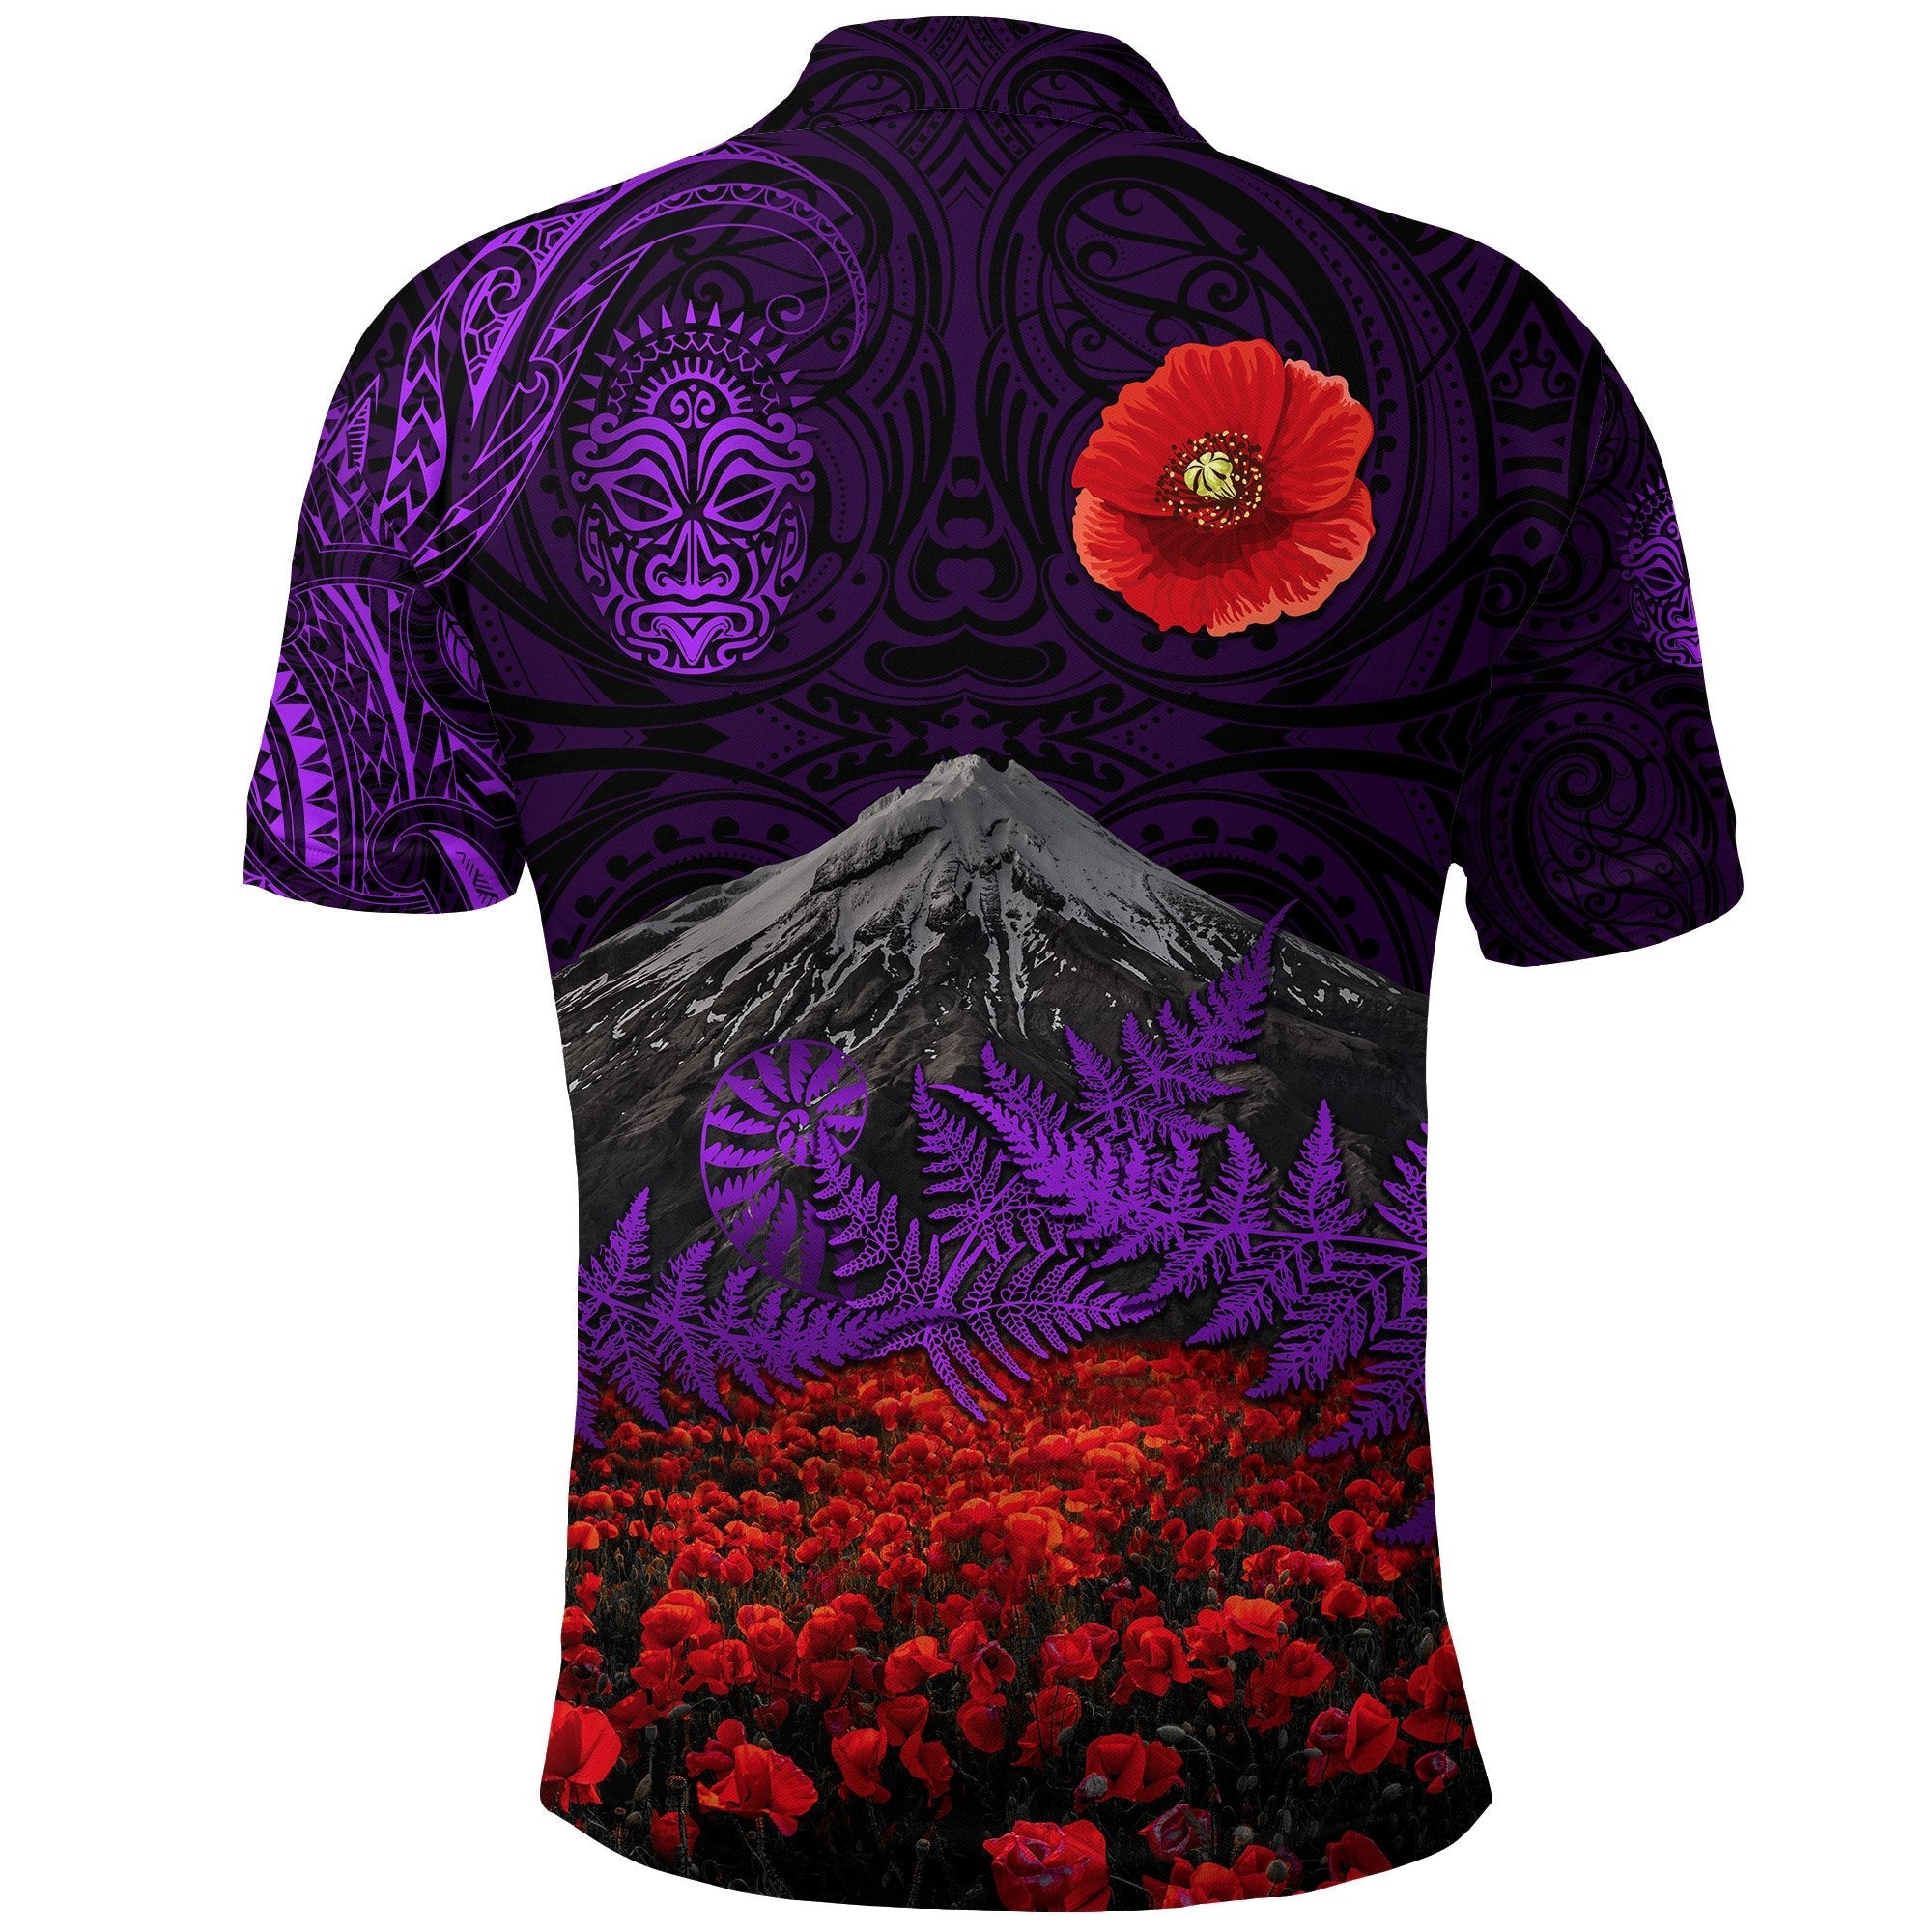 warriors-rugby-polo-shirt-new-zealand-mount-taranaki-with-poppy-flowers-anzac-vibes-purple